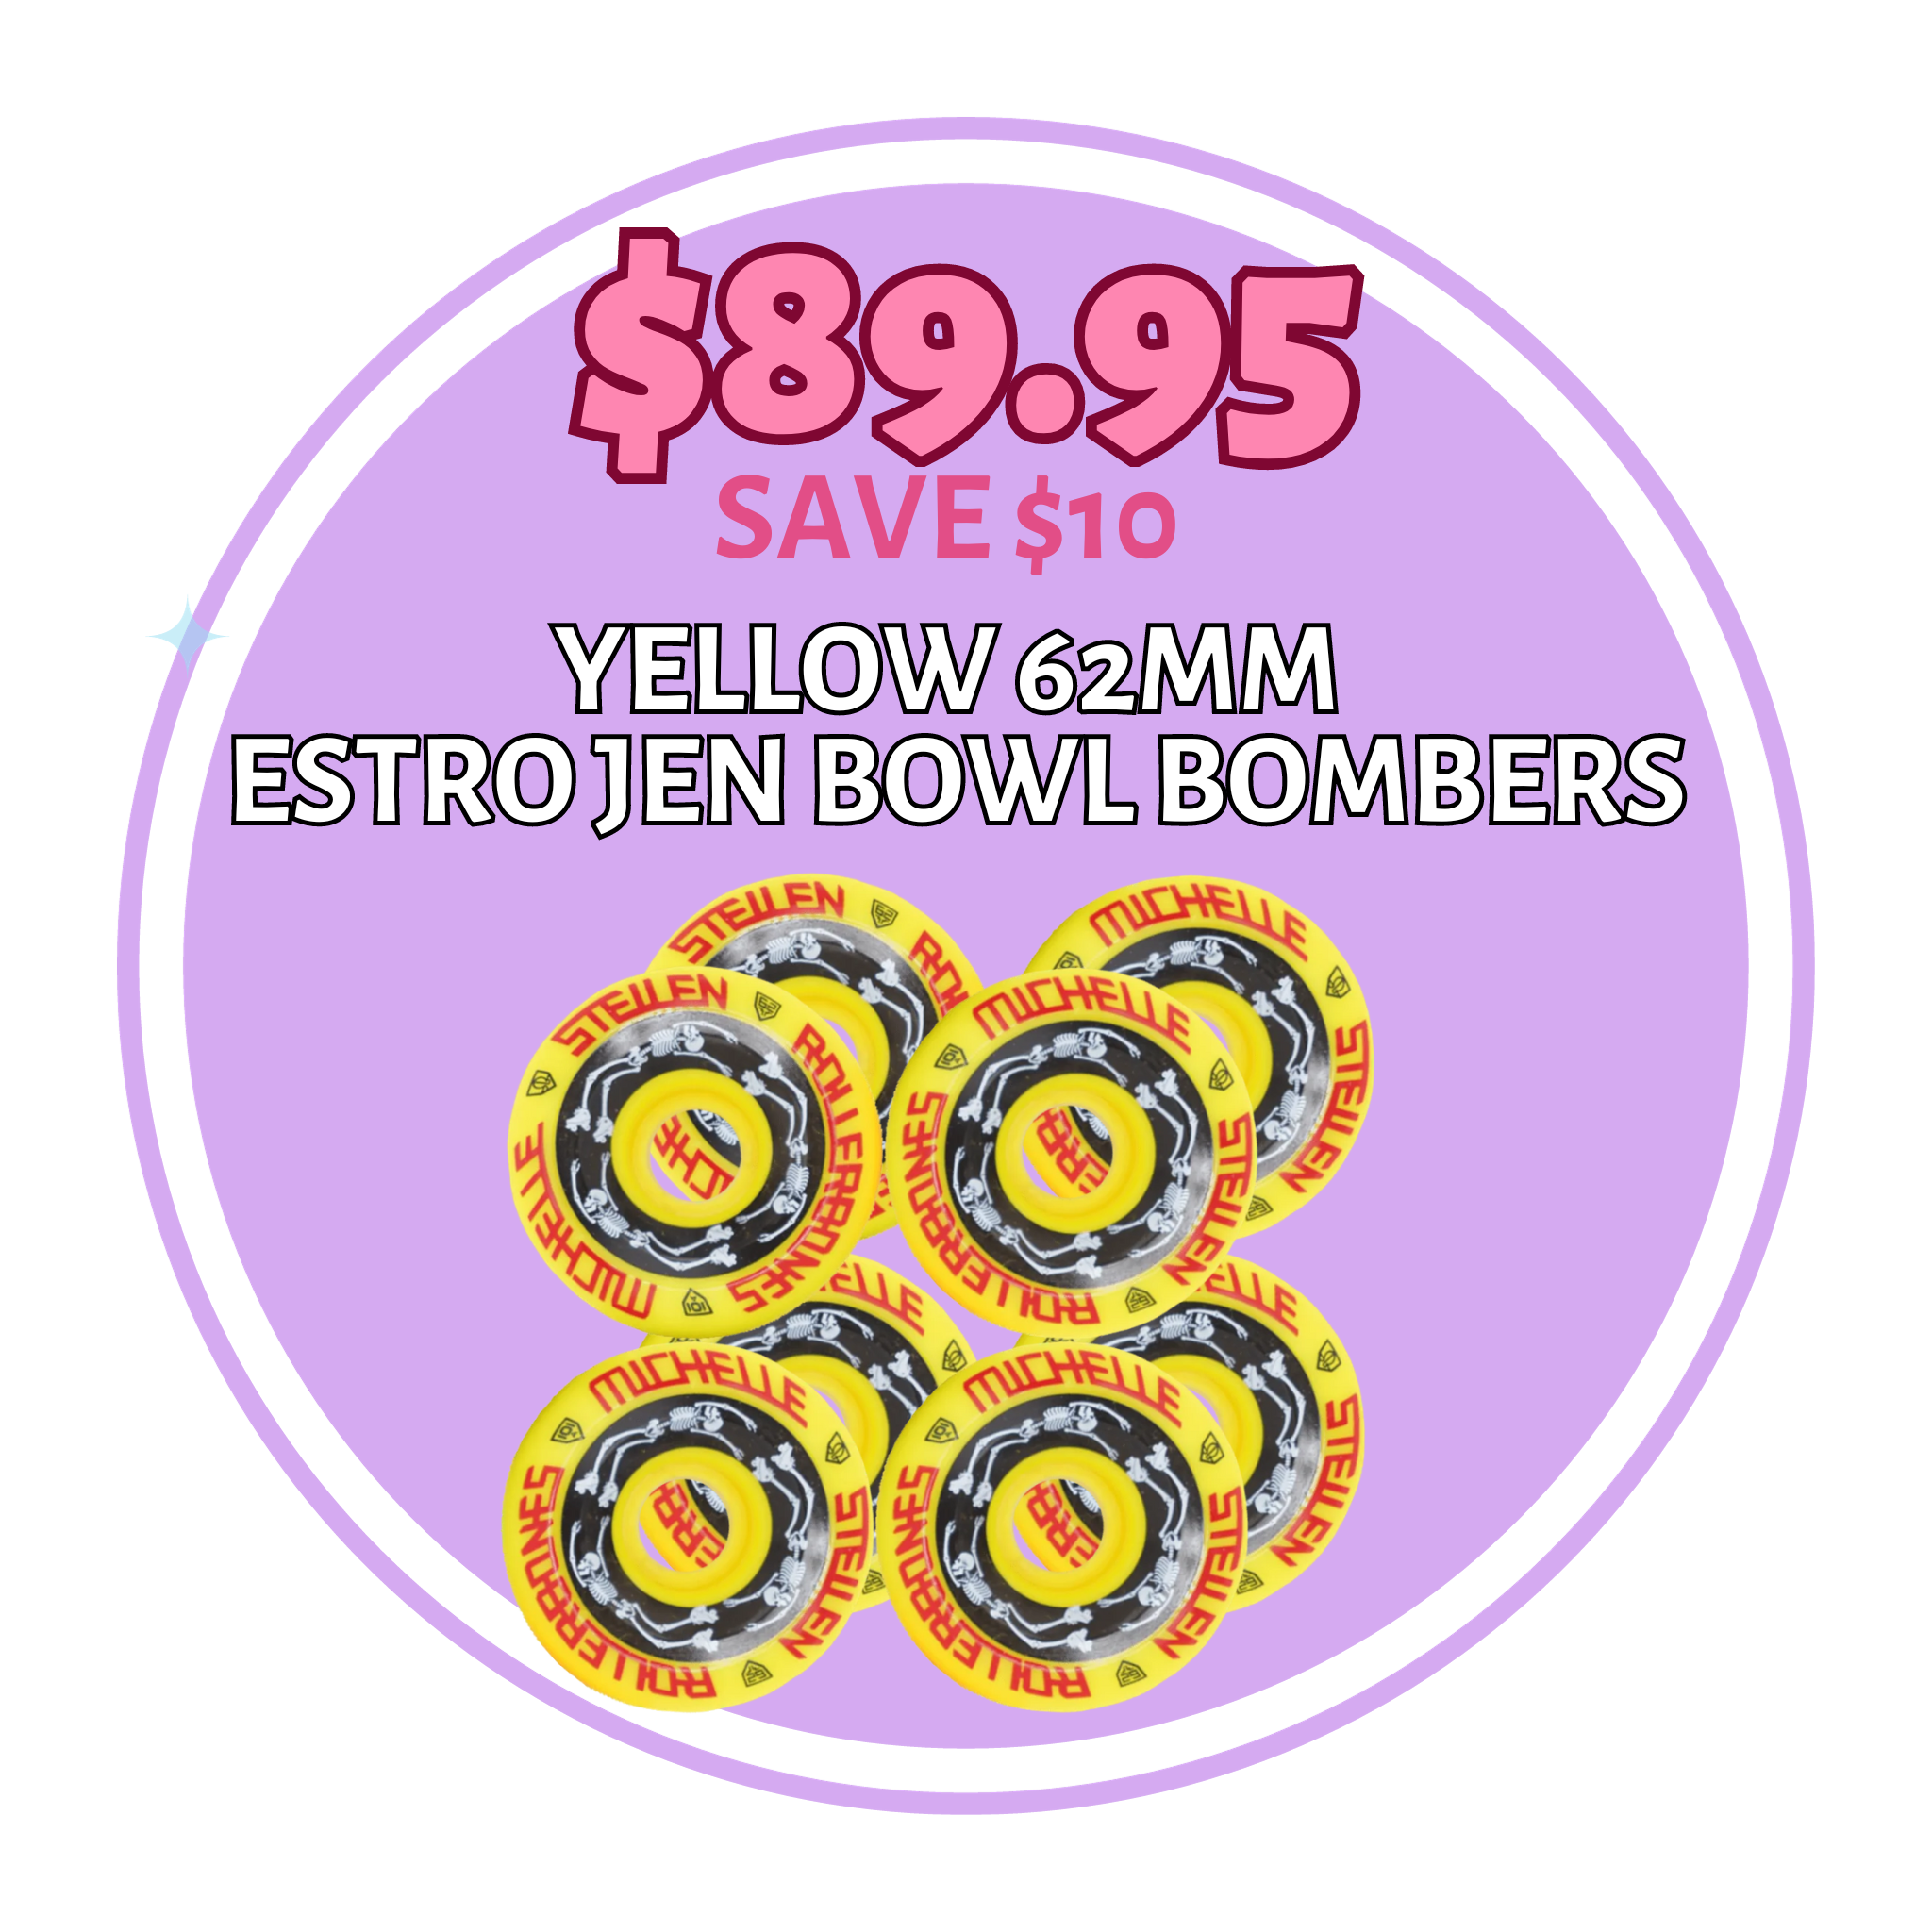 $89.95 yellow 62mm estrojen bowl bombers - save $10